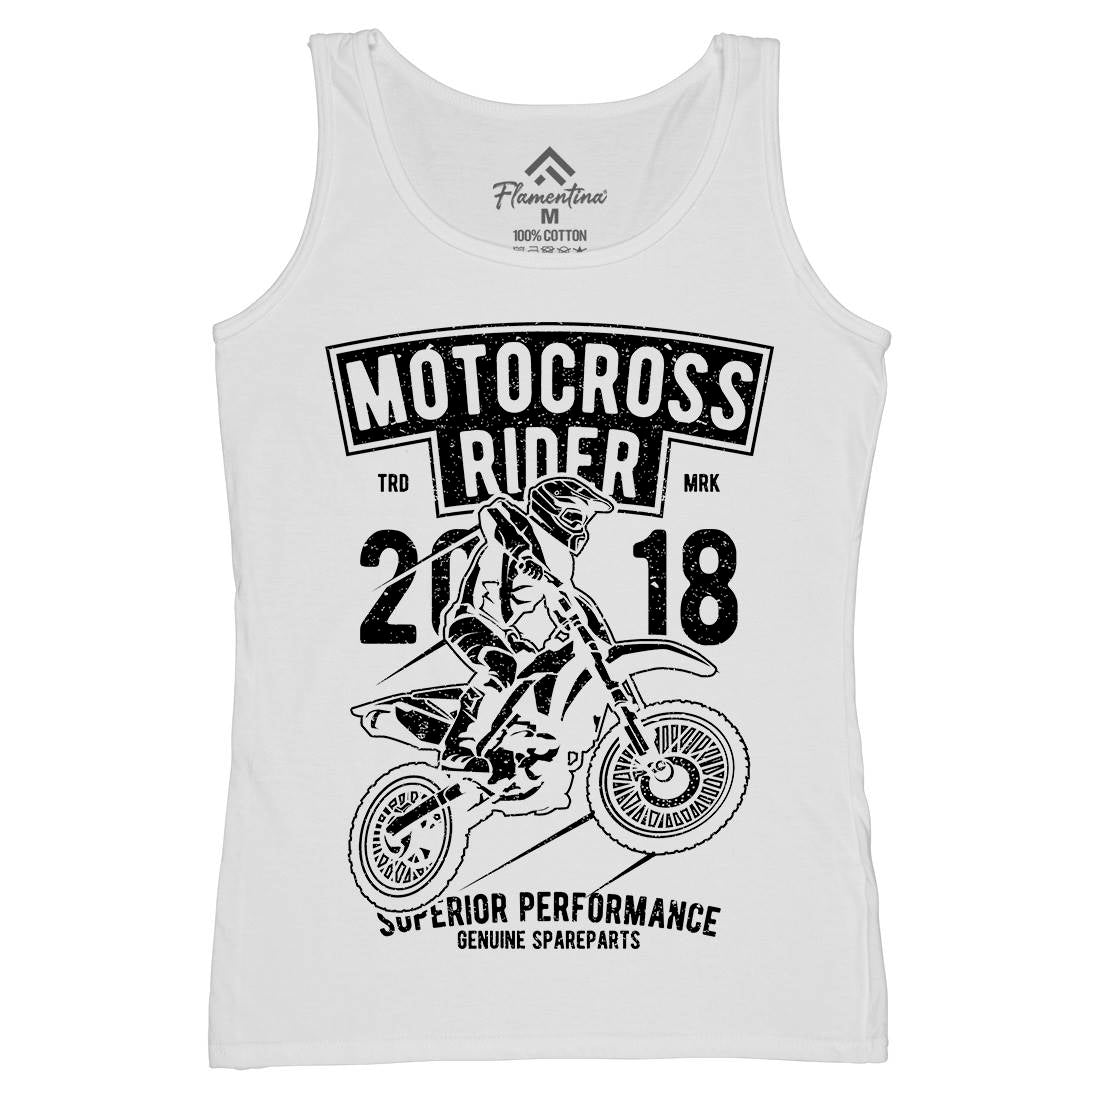 Motocross Rider Womens Organic Tank Top Vest Motorcycles A718